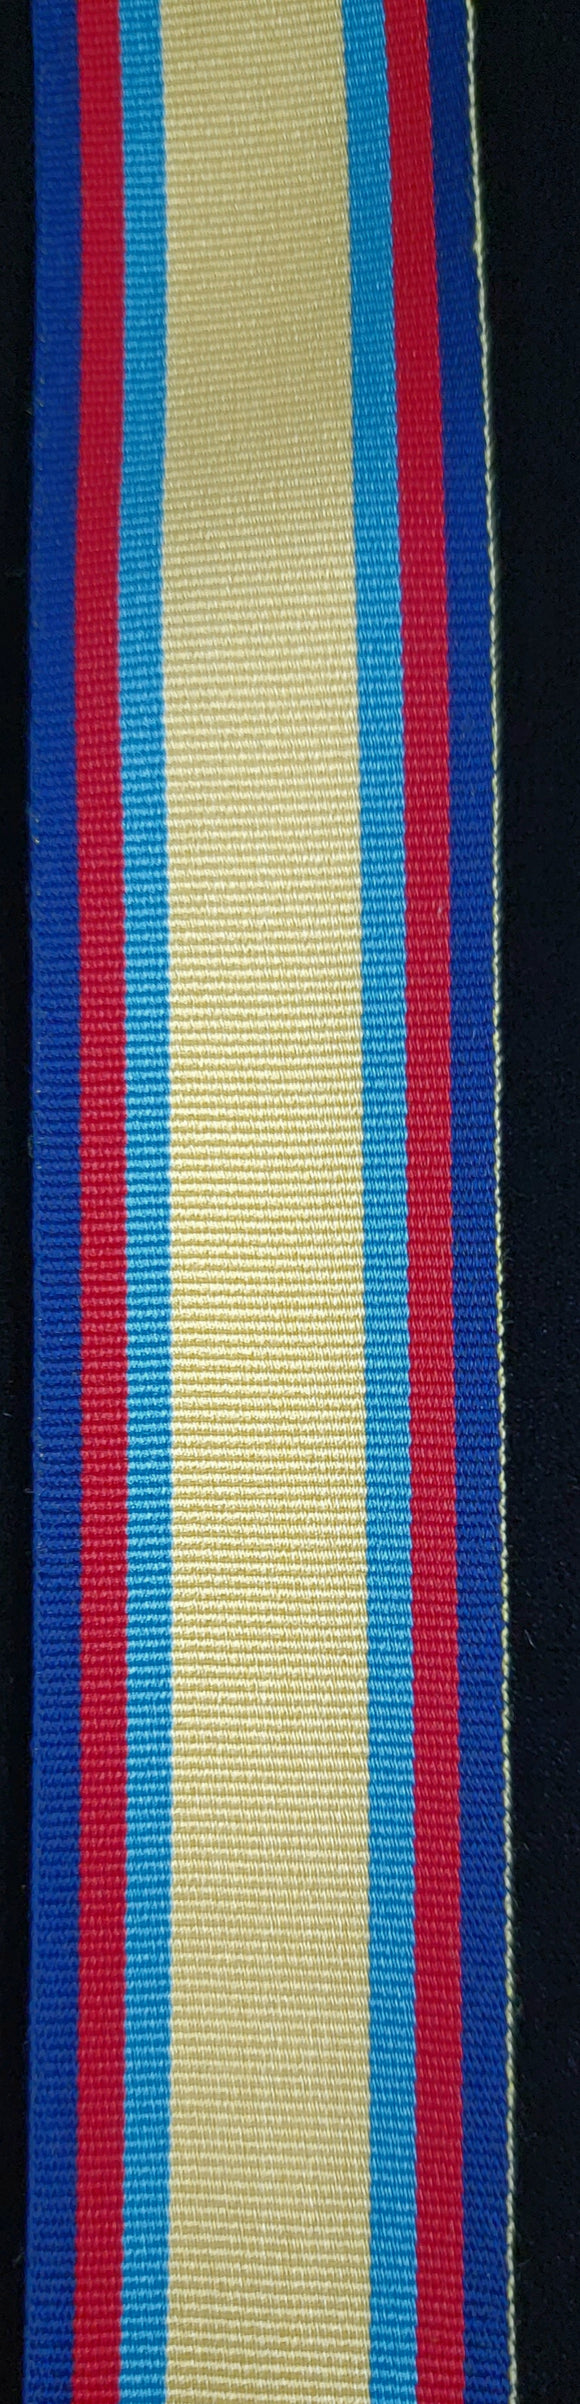 Ribbon, UK Gulf War Medal 1990-91